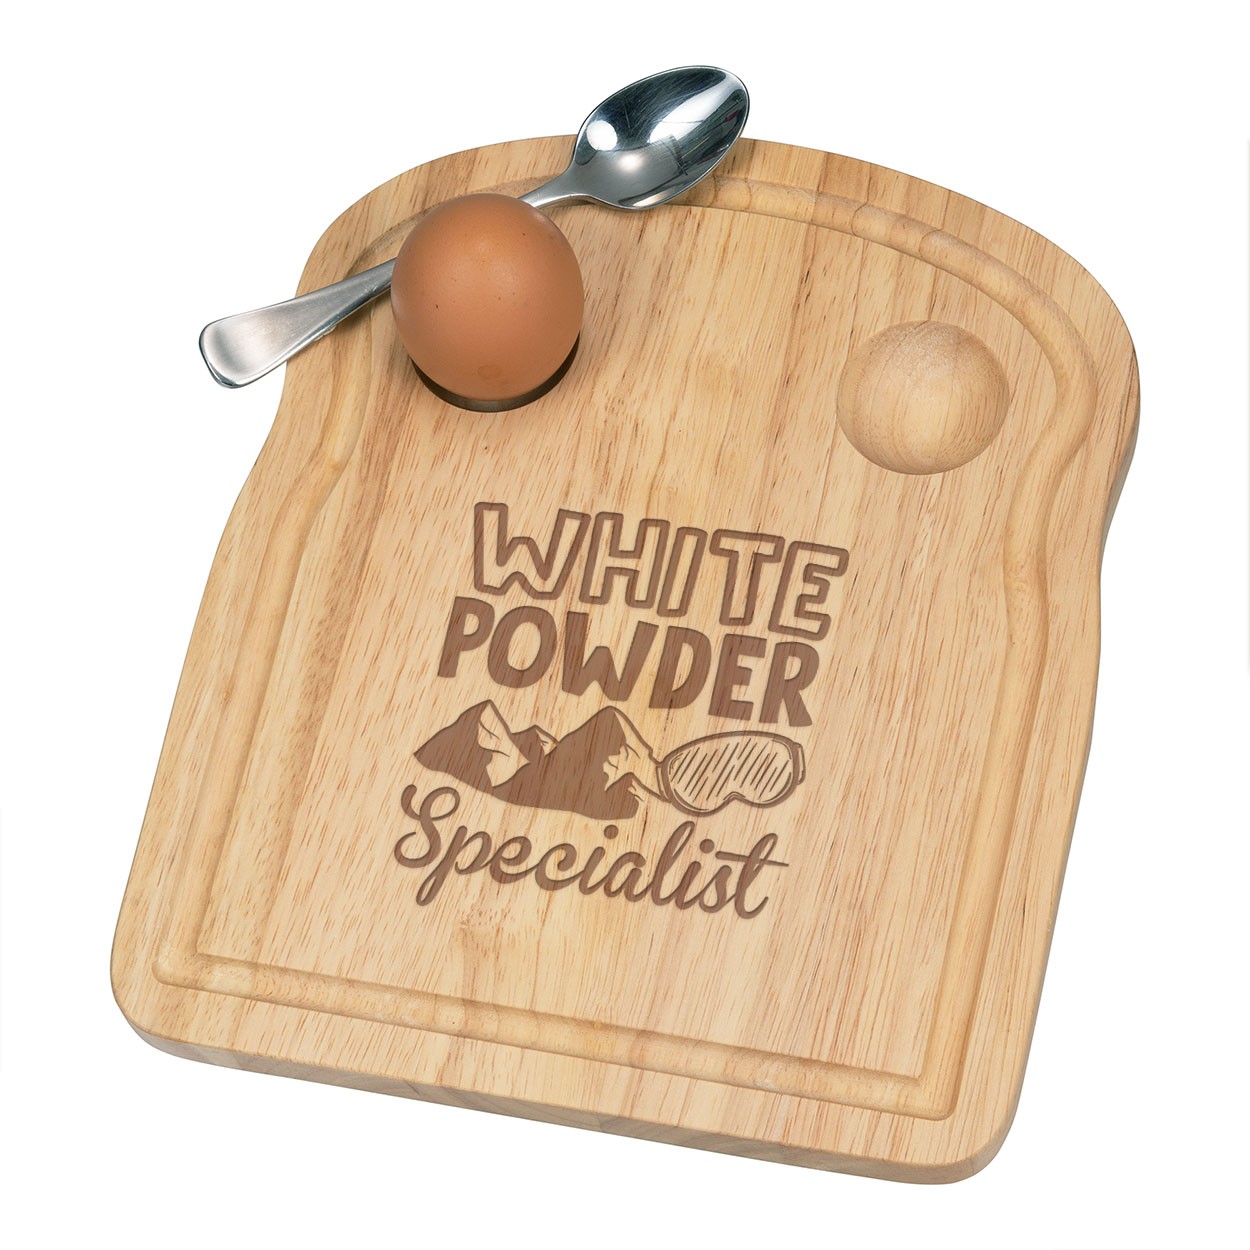 White Powder Specialist Breakfast Dippy Egg Cup Board Wooden